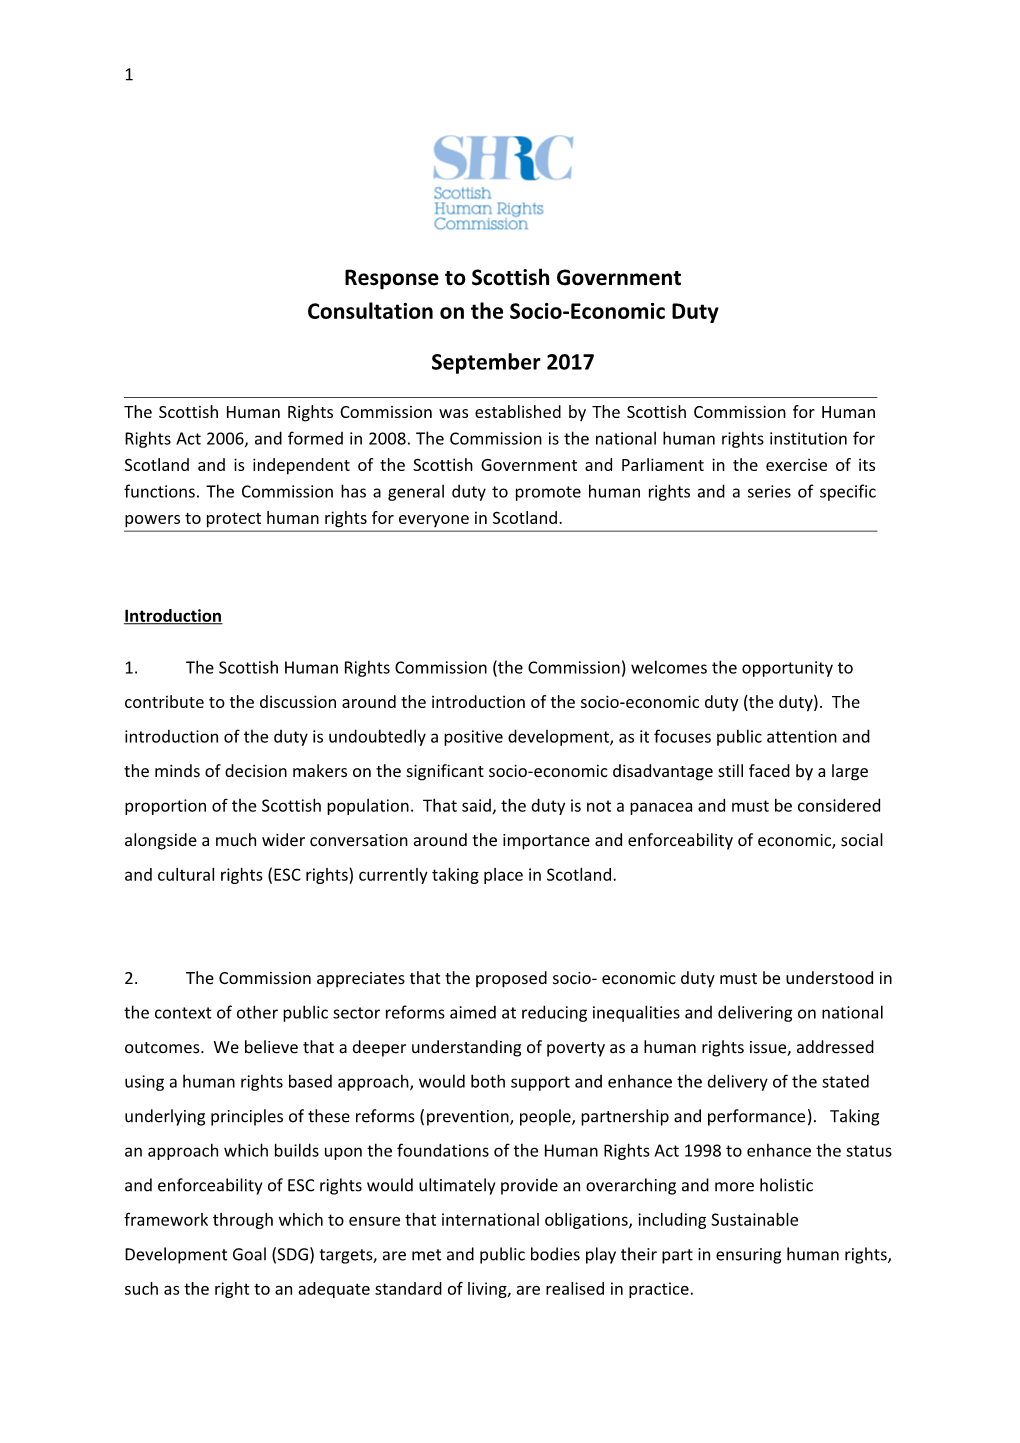 Response to Scottish Government Consultation on the Socio-Economic Duty